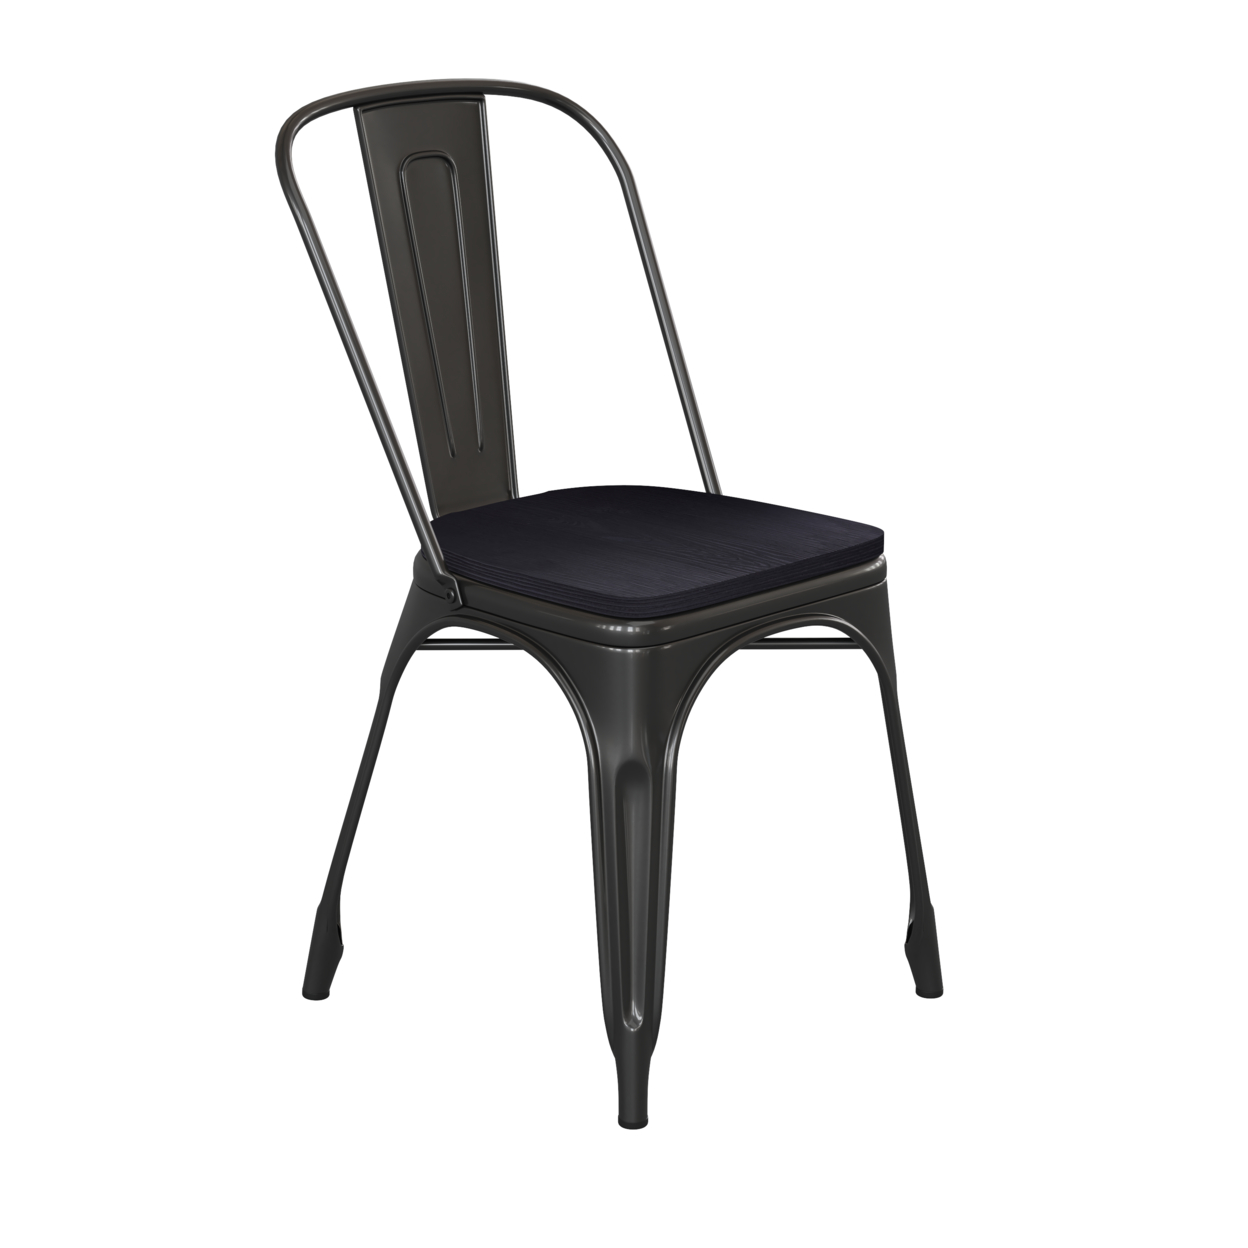 Metal Chair, Curved Design Back, Polyresin Wood Sleek Seat, Black